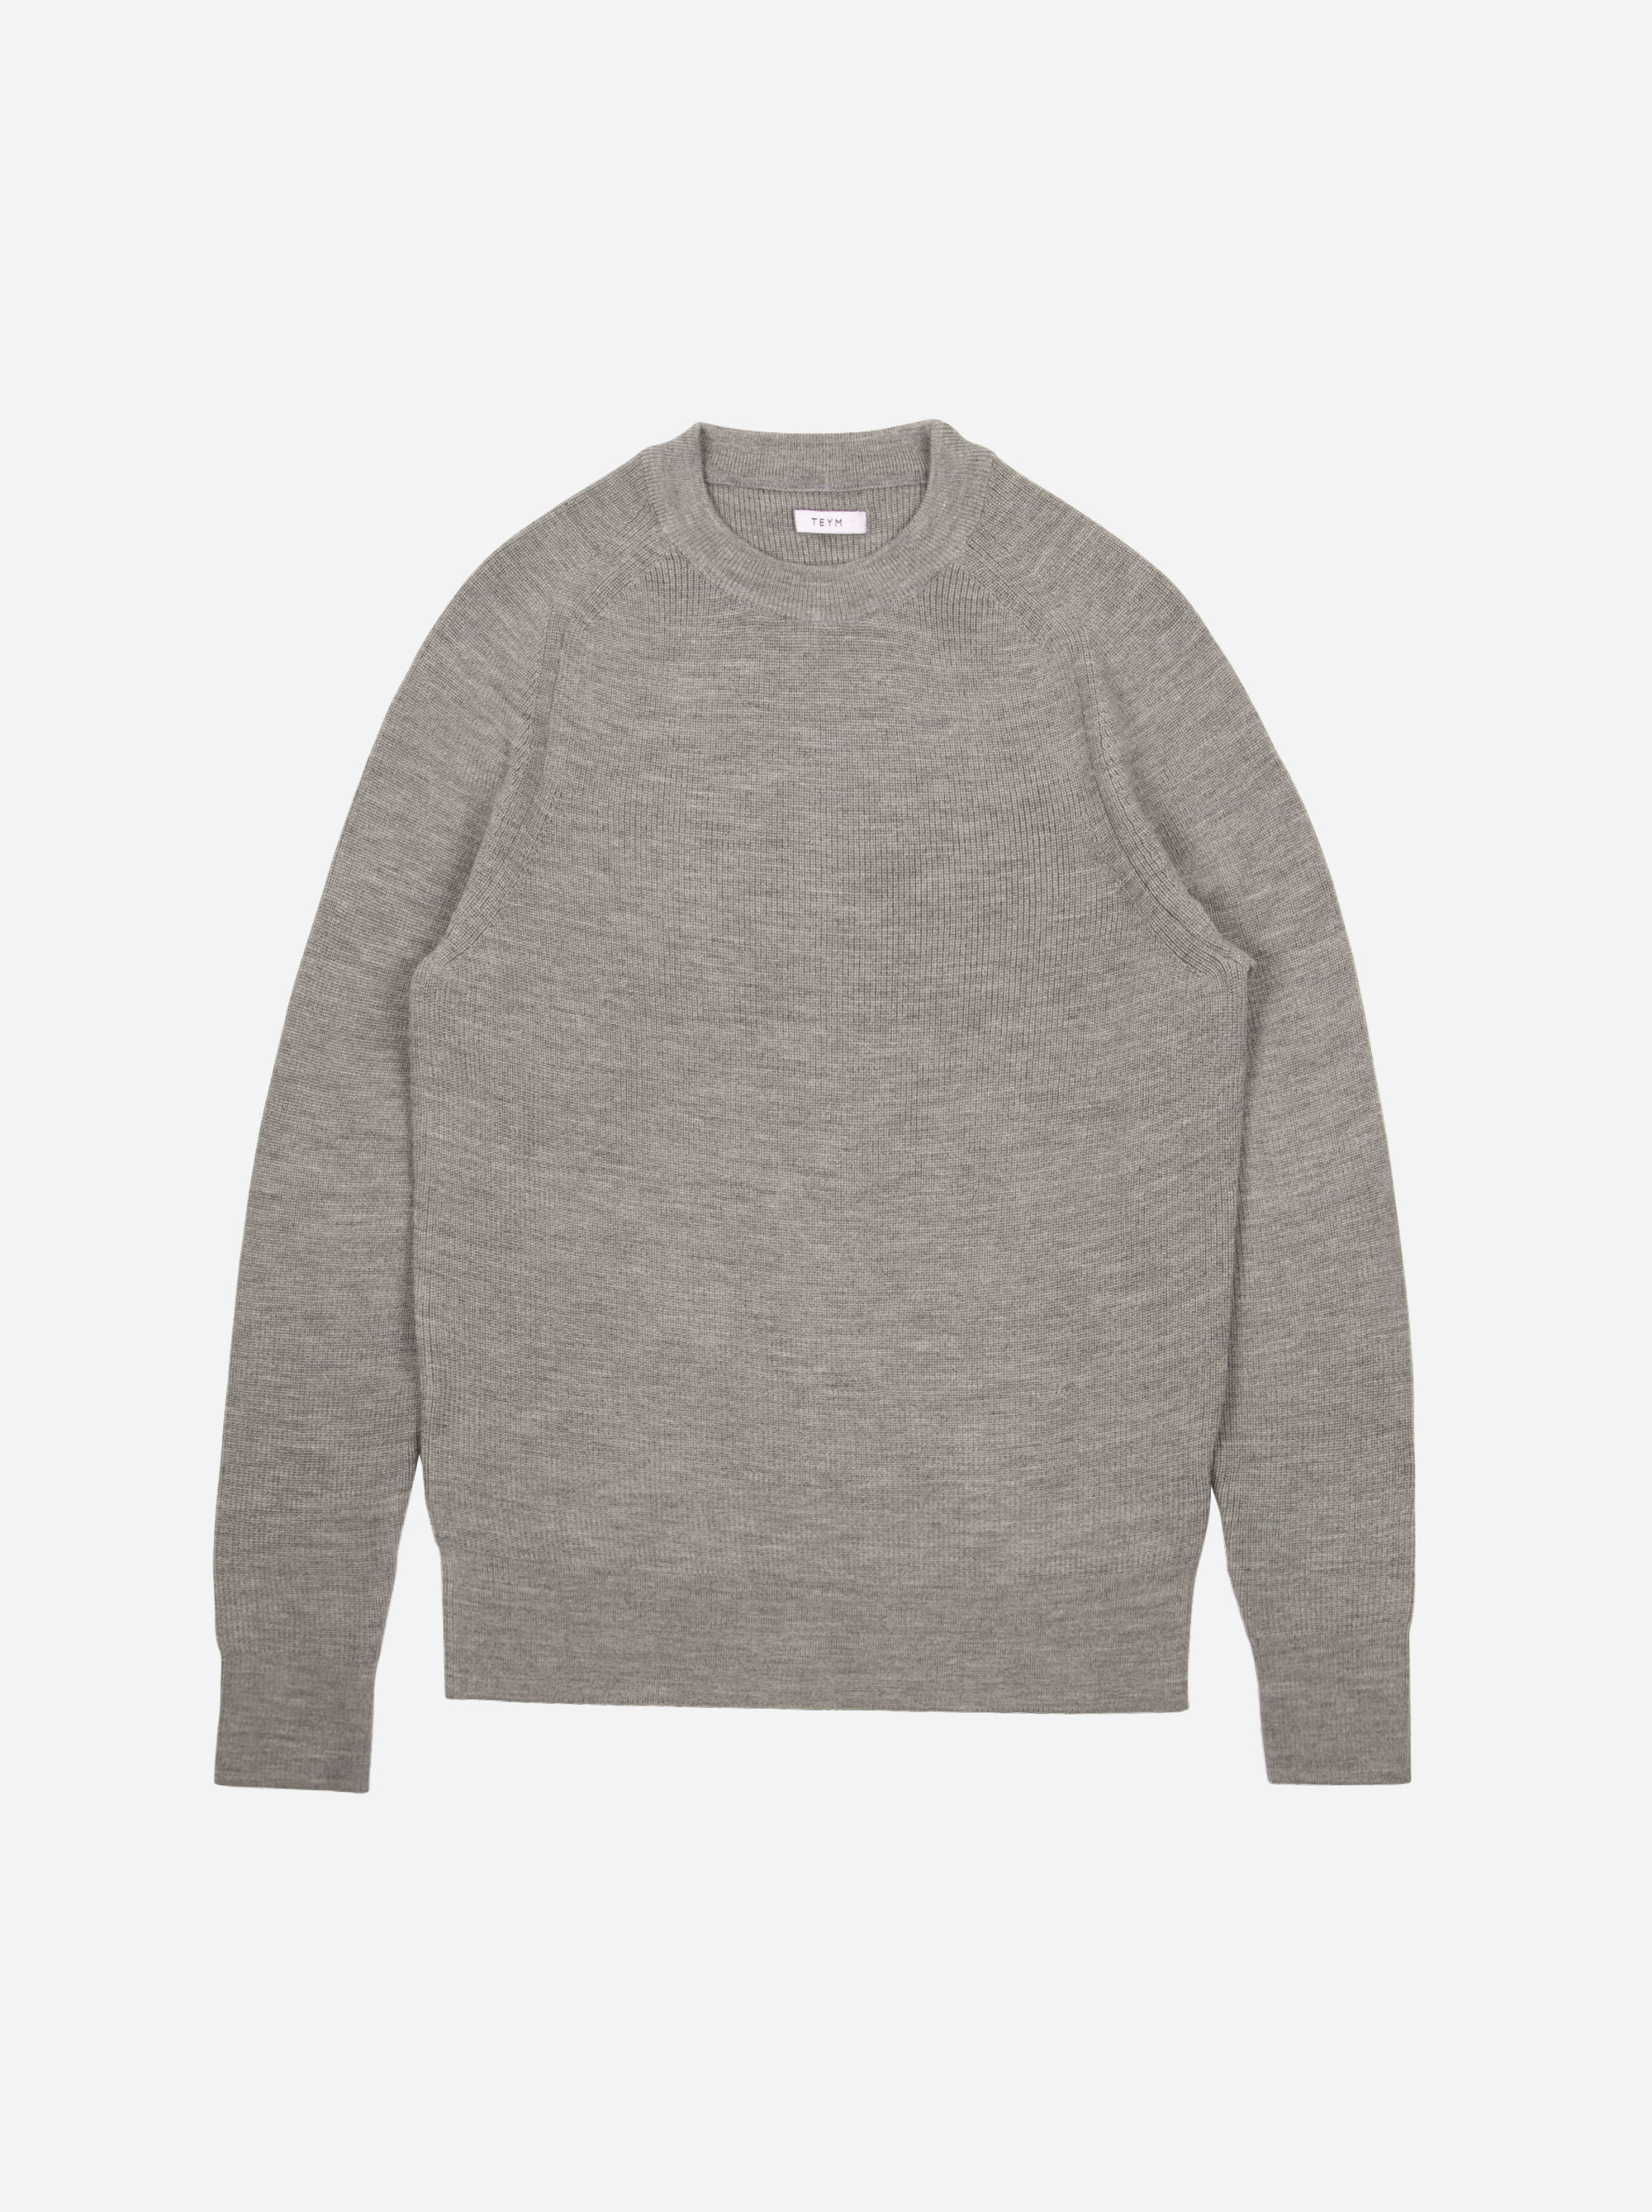 Teym - Crewneck - The Merino Sweater - Men - Grey - 5